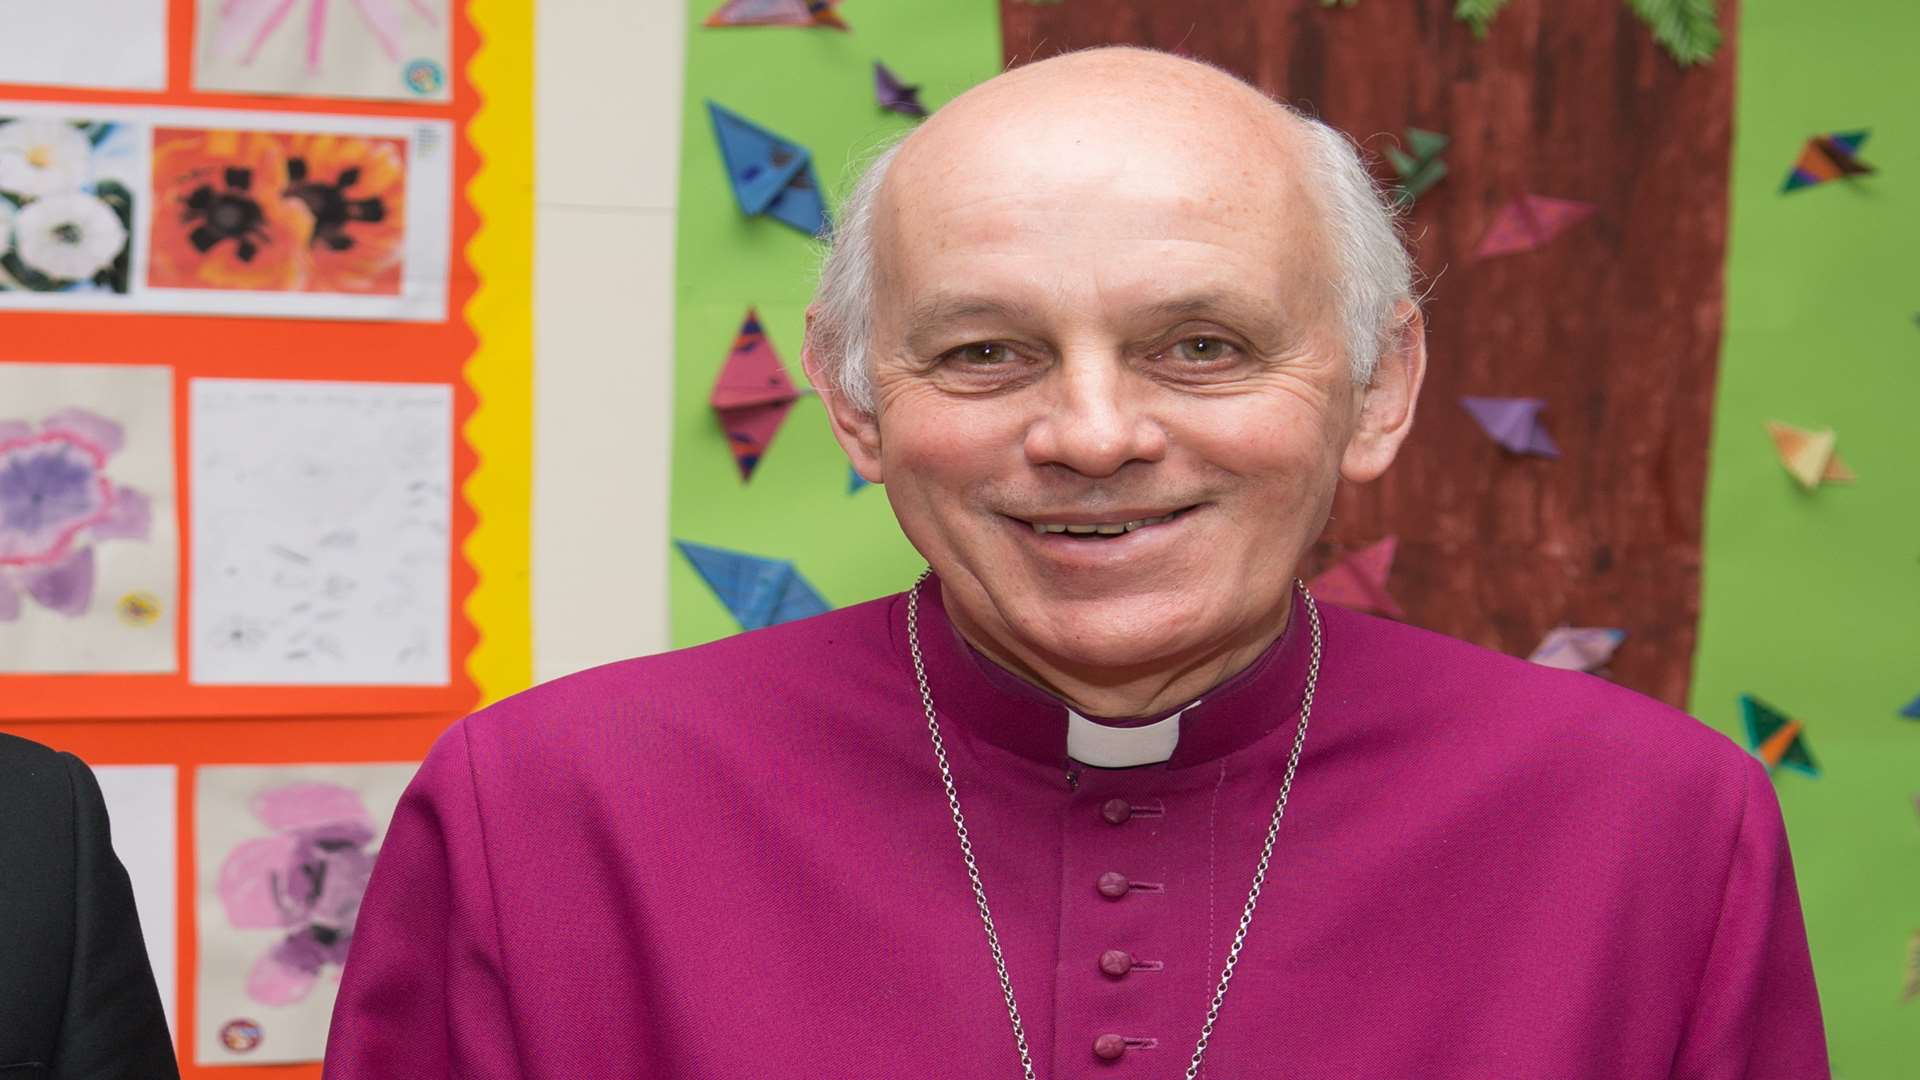 The Bishop of Dover, the Right Rev Trevor Willmott